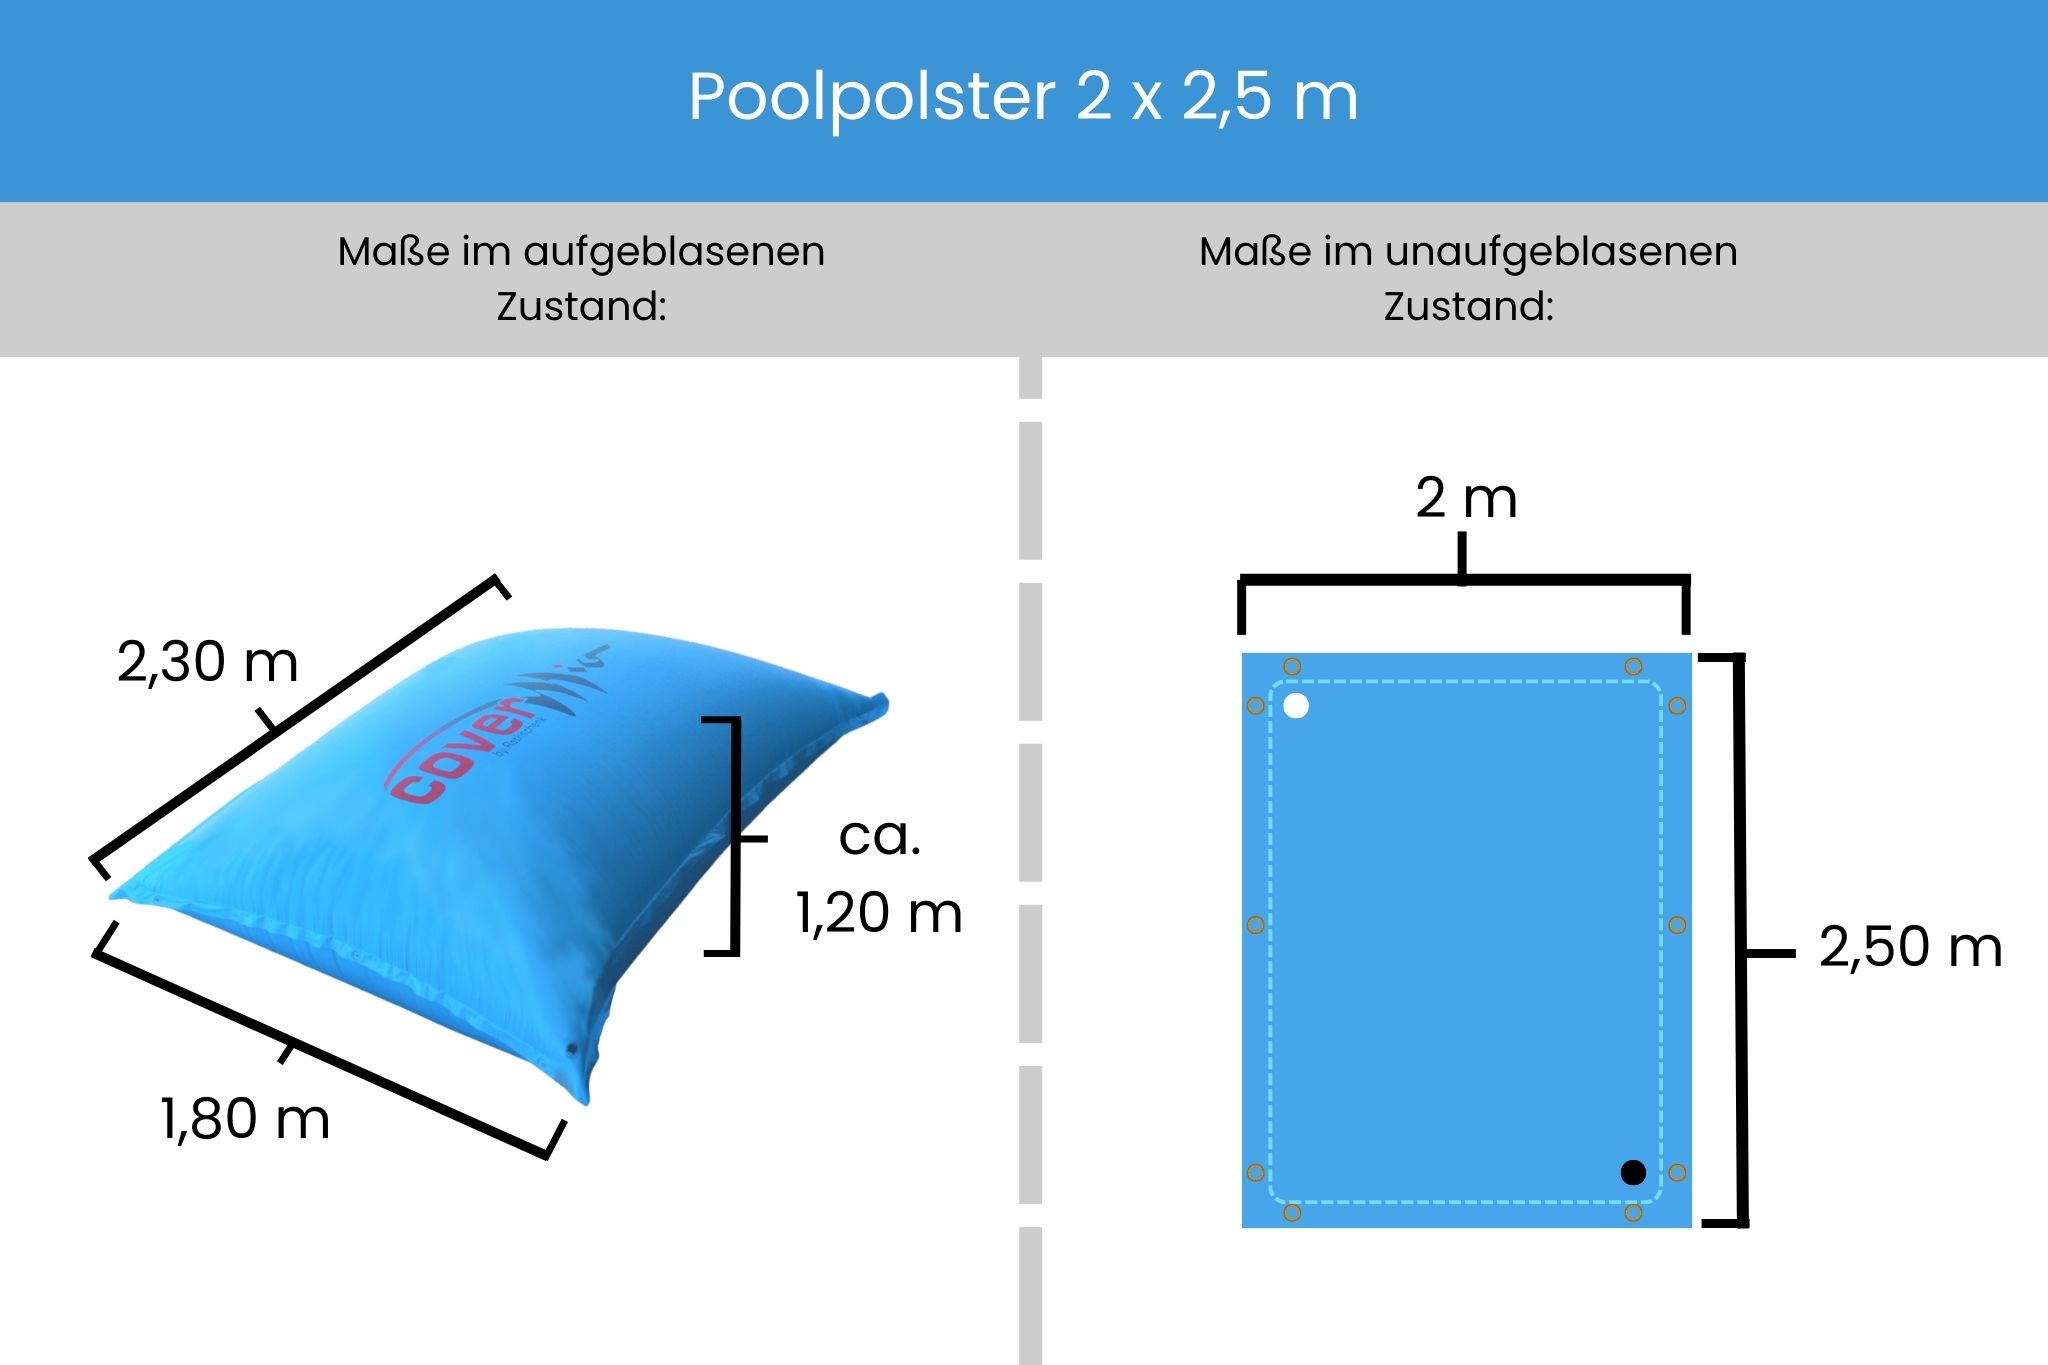 Poolpolster 5 x 2,5 m